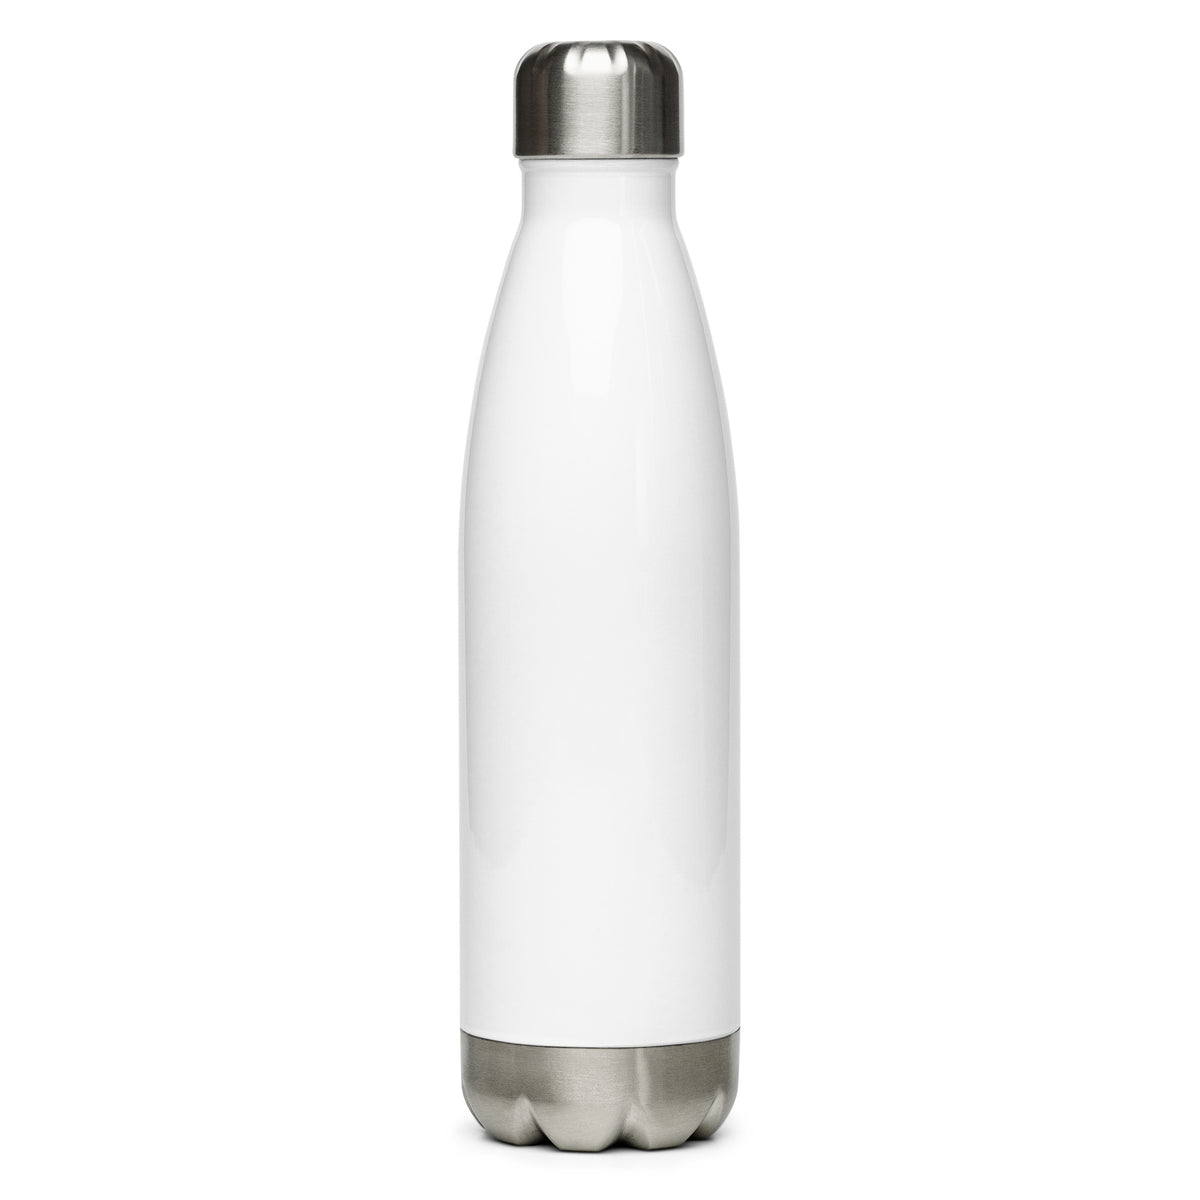 Lakeaholic Stainless Steel Water Bottle